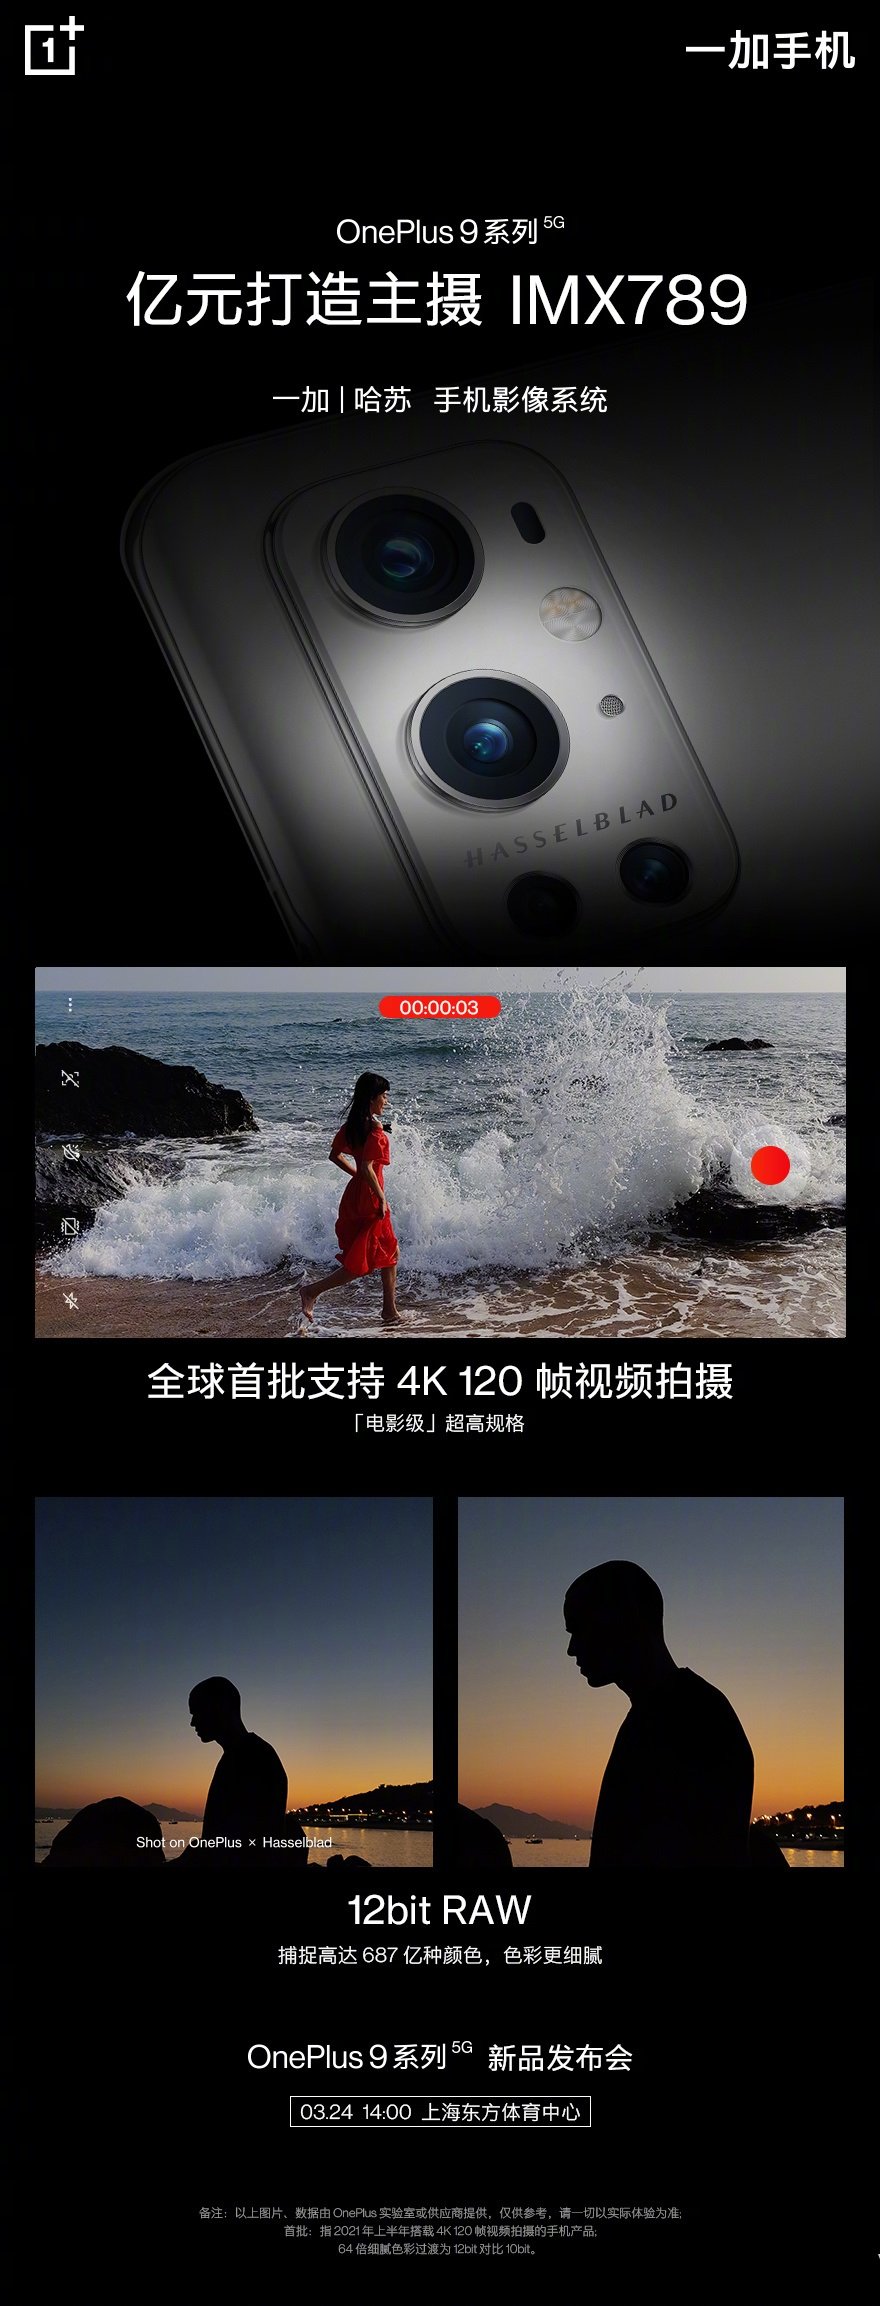 OnePlus 9 Series Camera